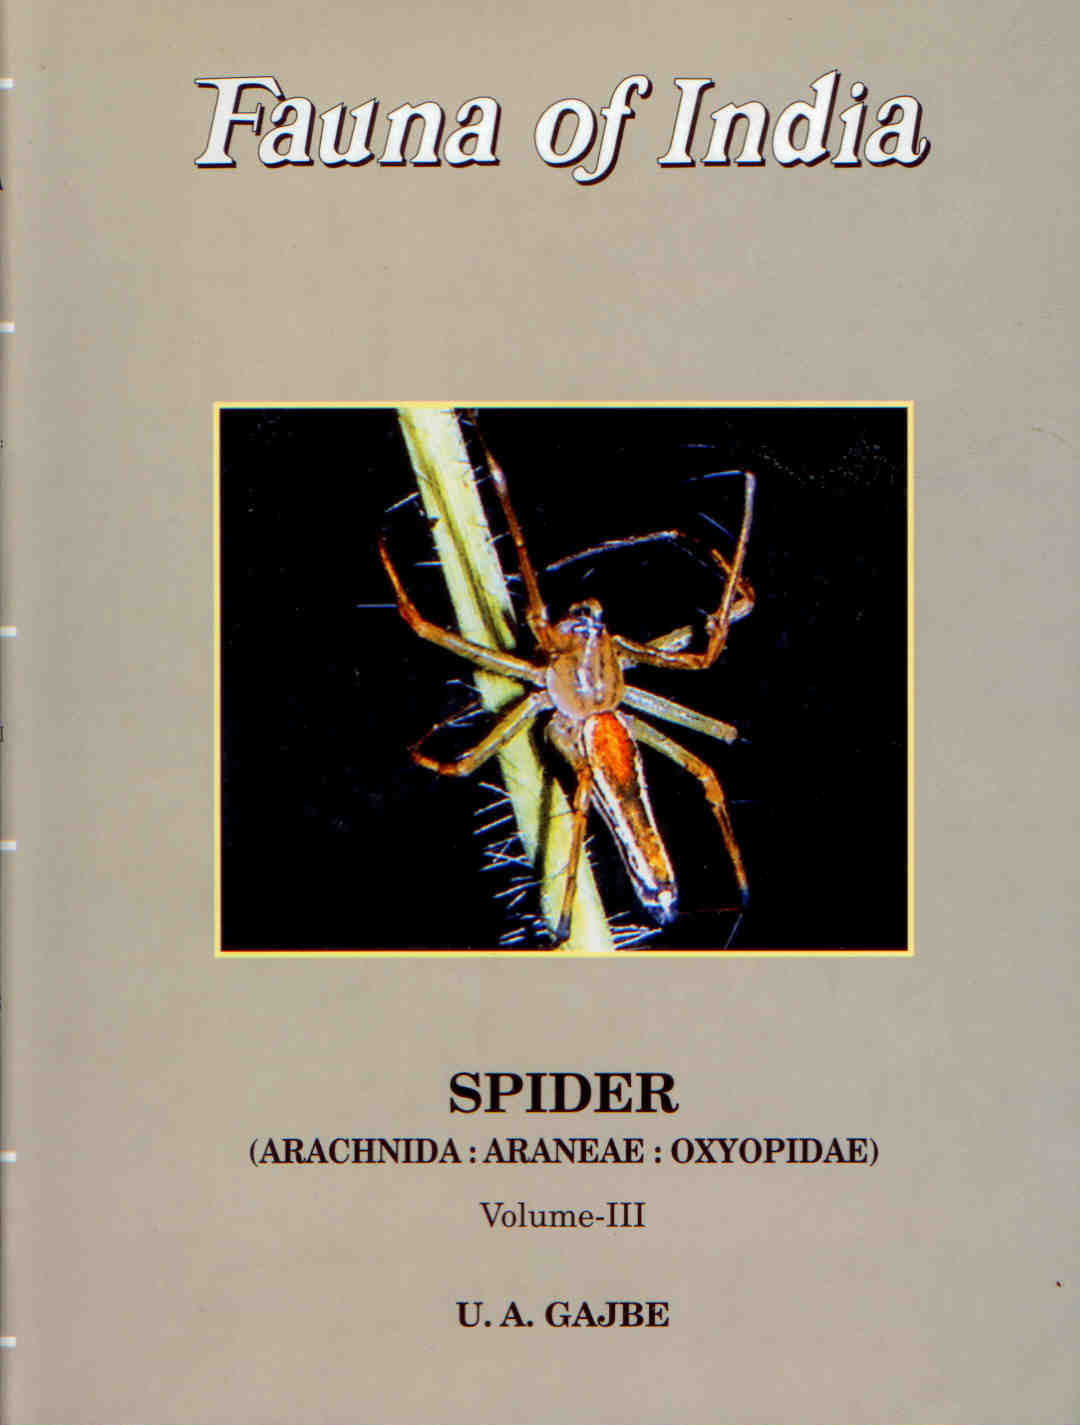 Fauna of India: Spider Vol. III: Arachnida: Araneae: Oxyopidae - Gajbe, U.A.